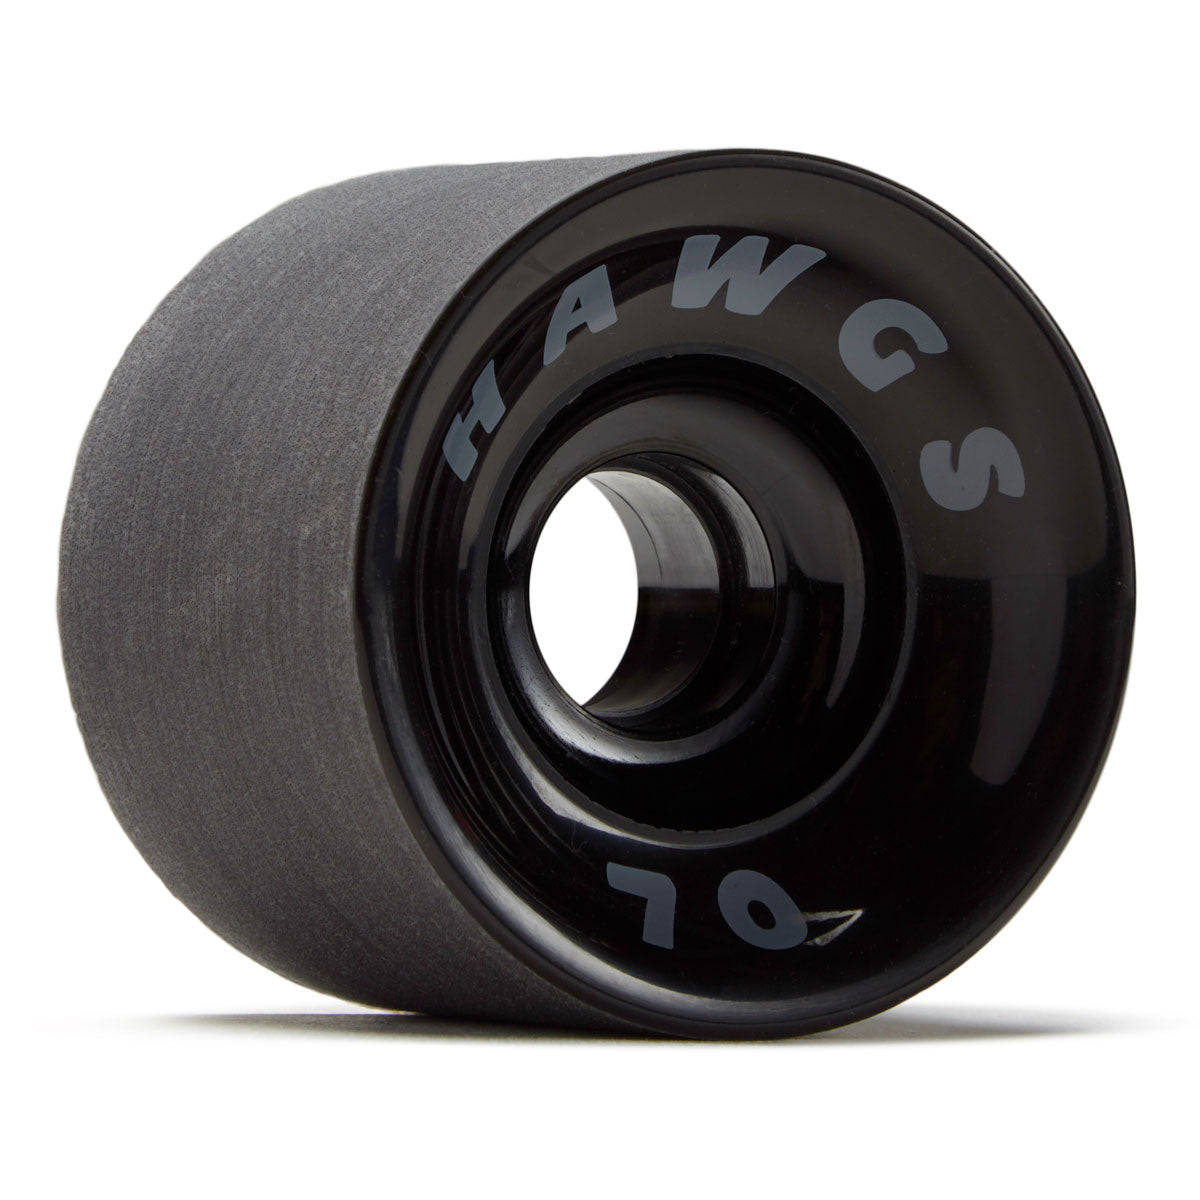 Hawgs Supreme 78a Stone Ground Longboard Wheels - Black - 70mm image 1